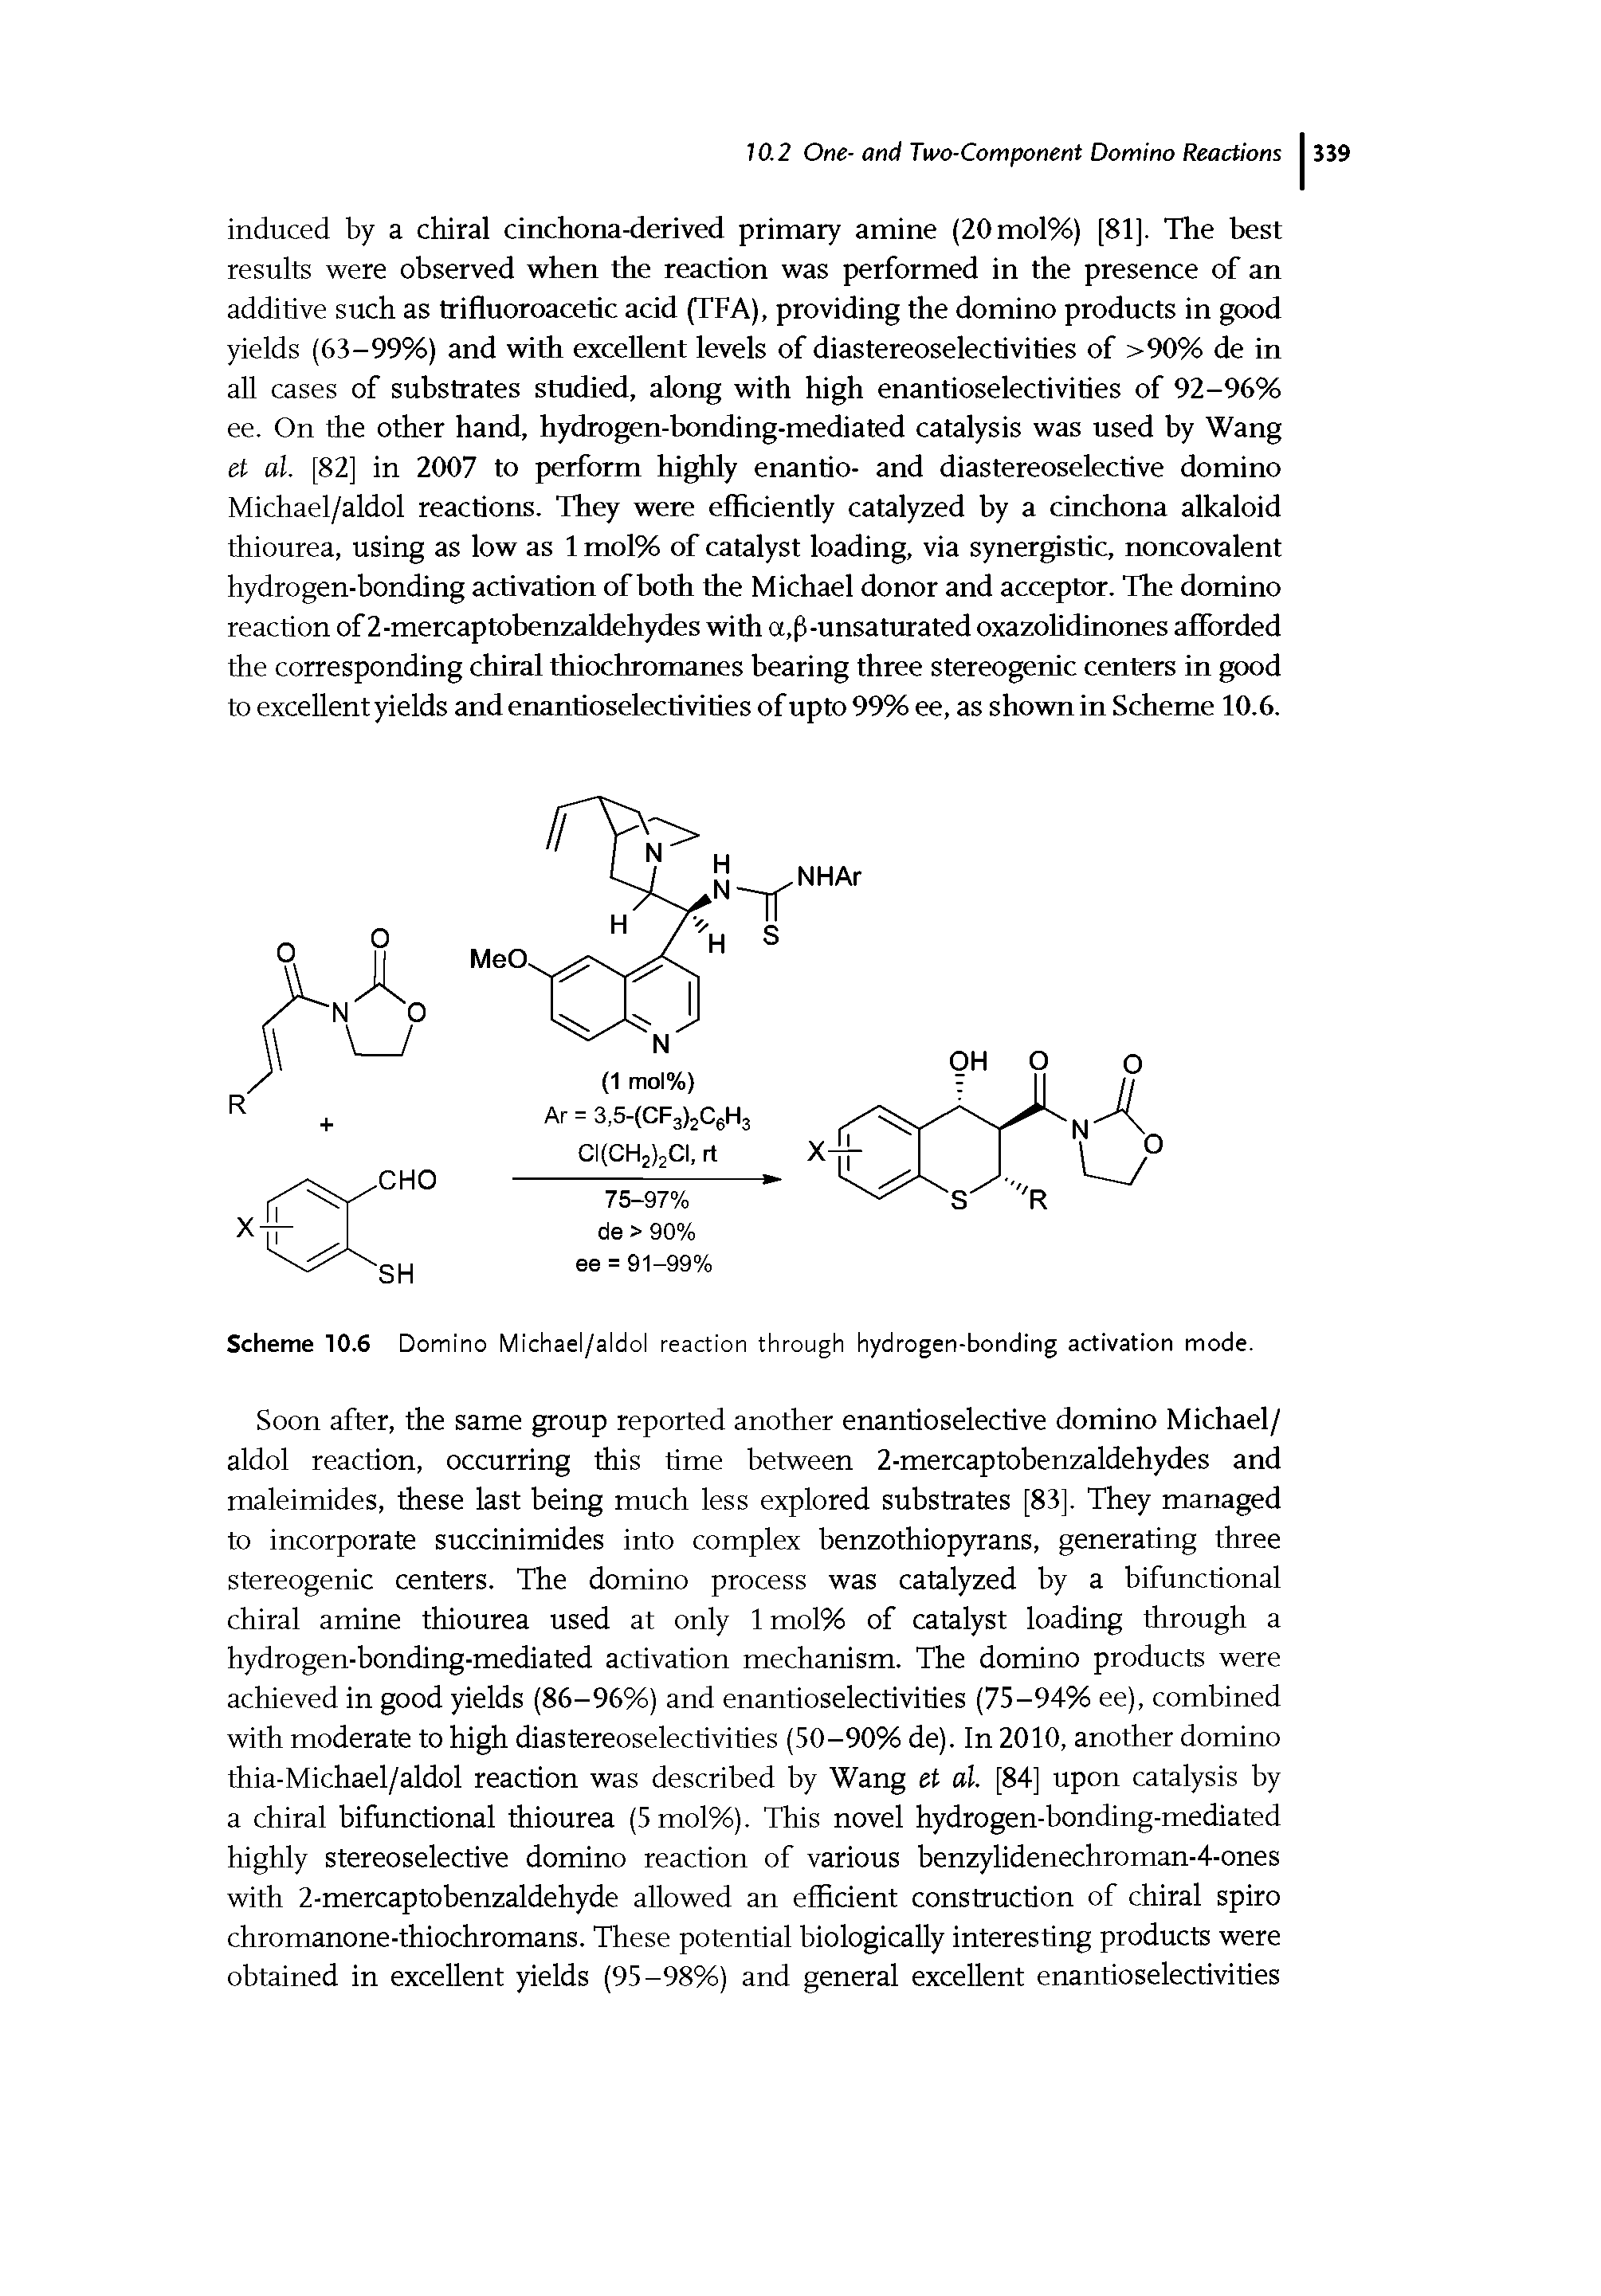 Scheme 10.6 Domino Michael/aldol reaction through hydrogen-bonding activation mode.